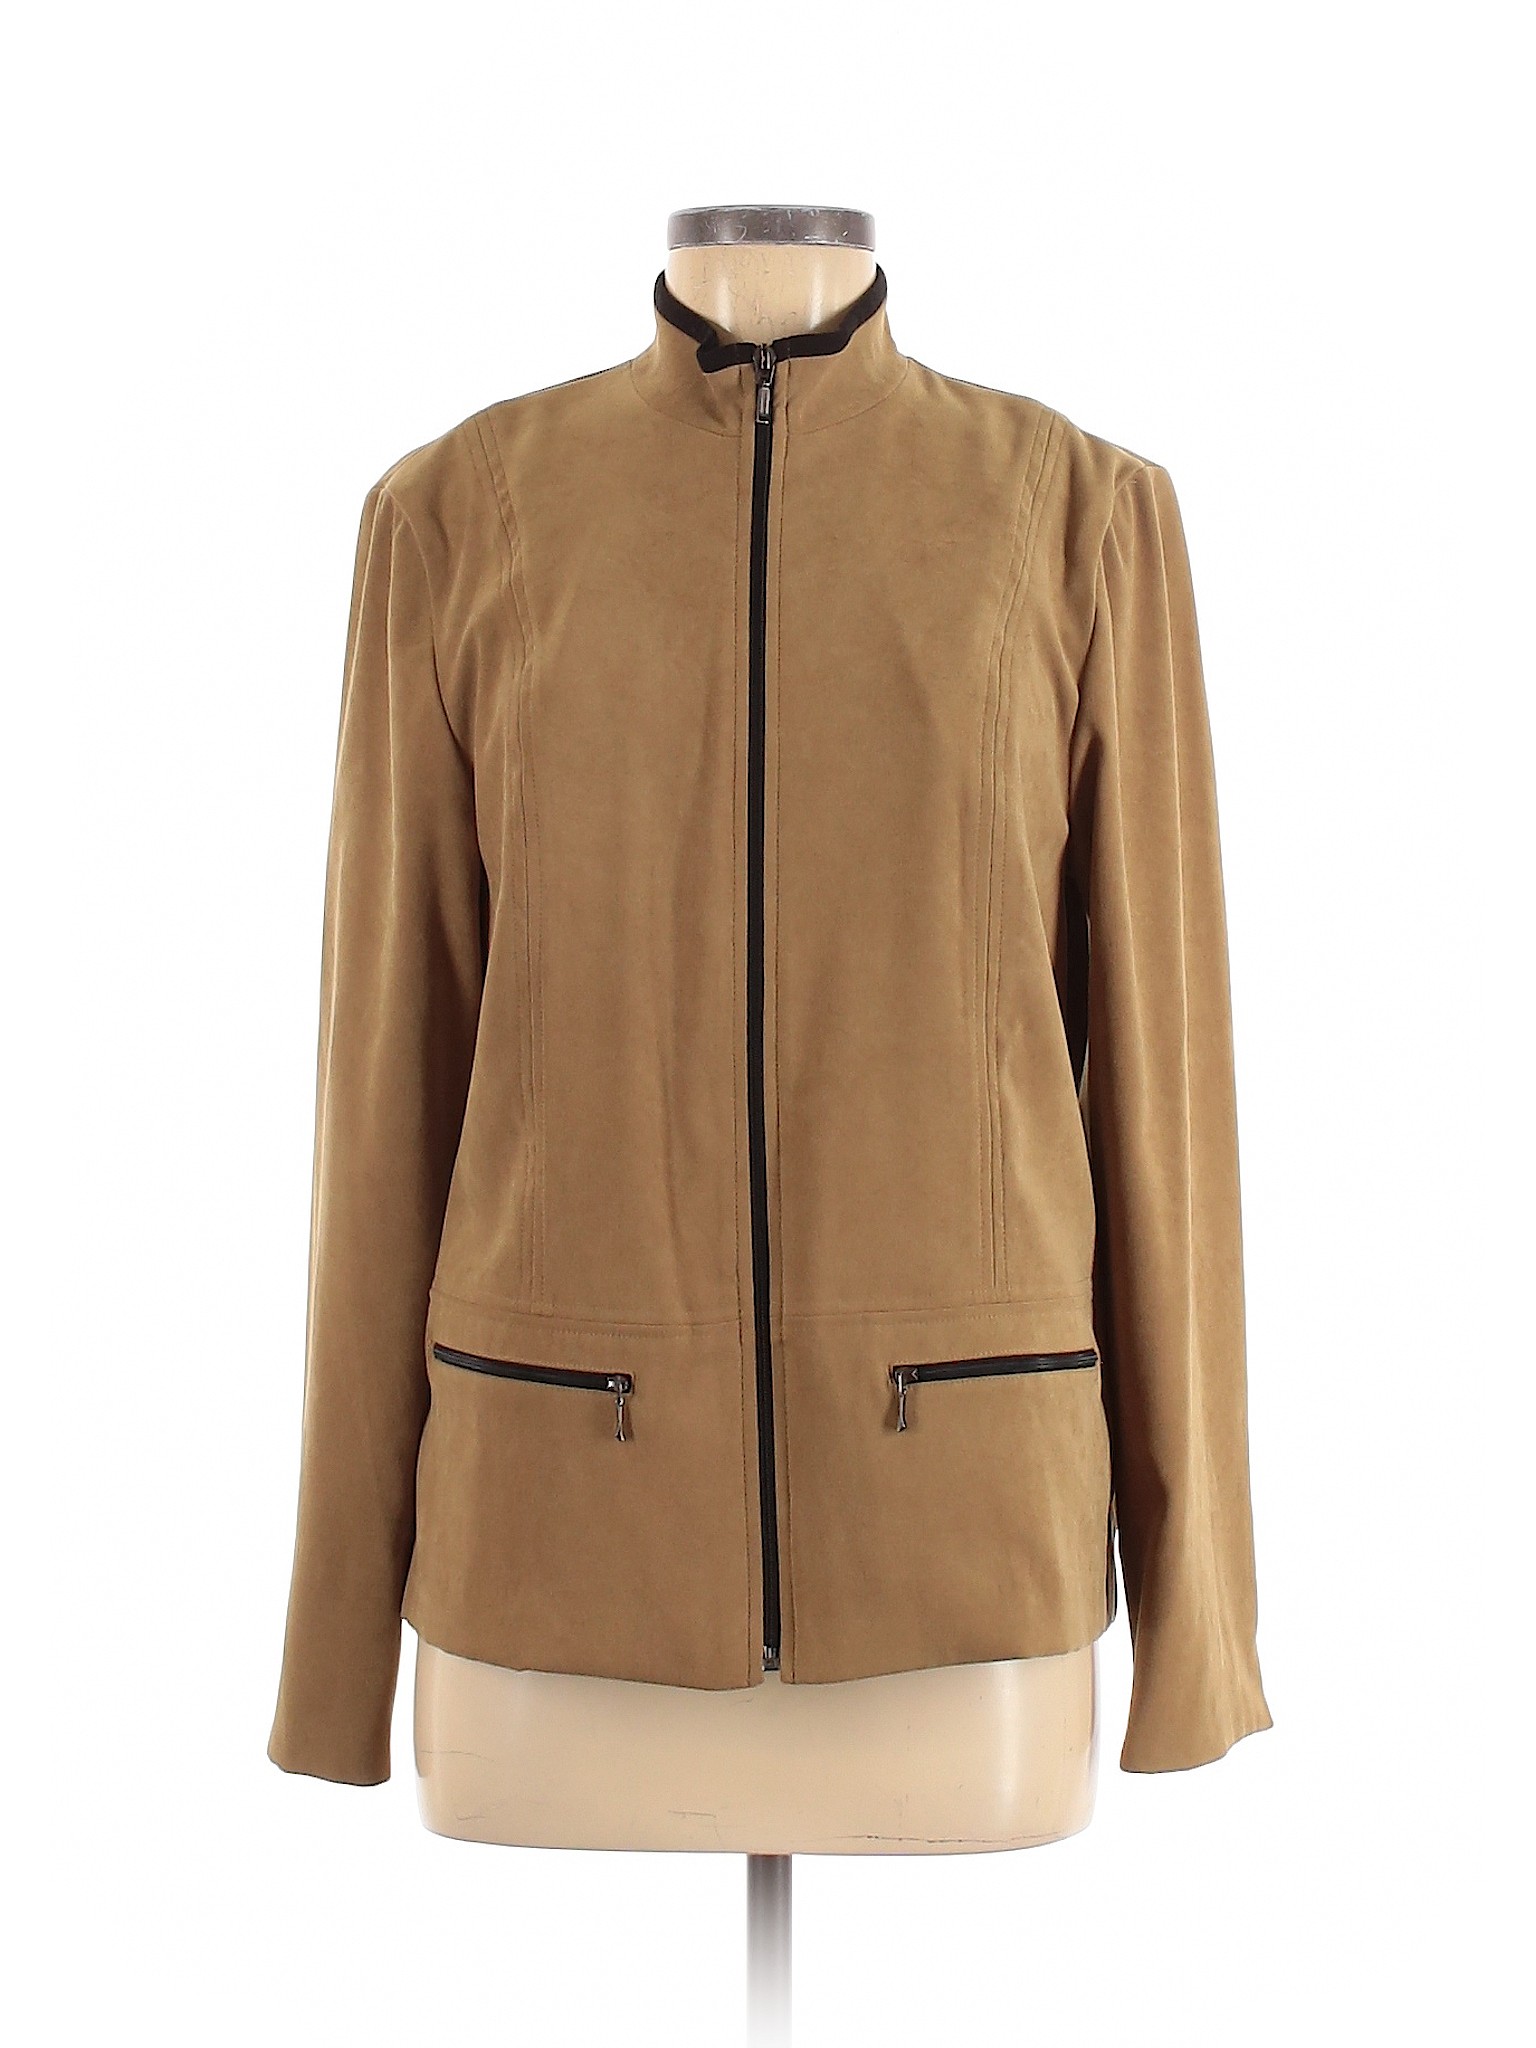 JM Collection Women Brown Jacket 12 | eBay